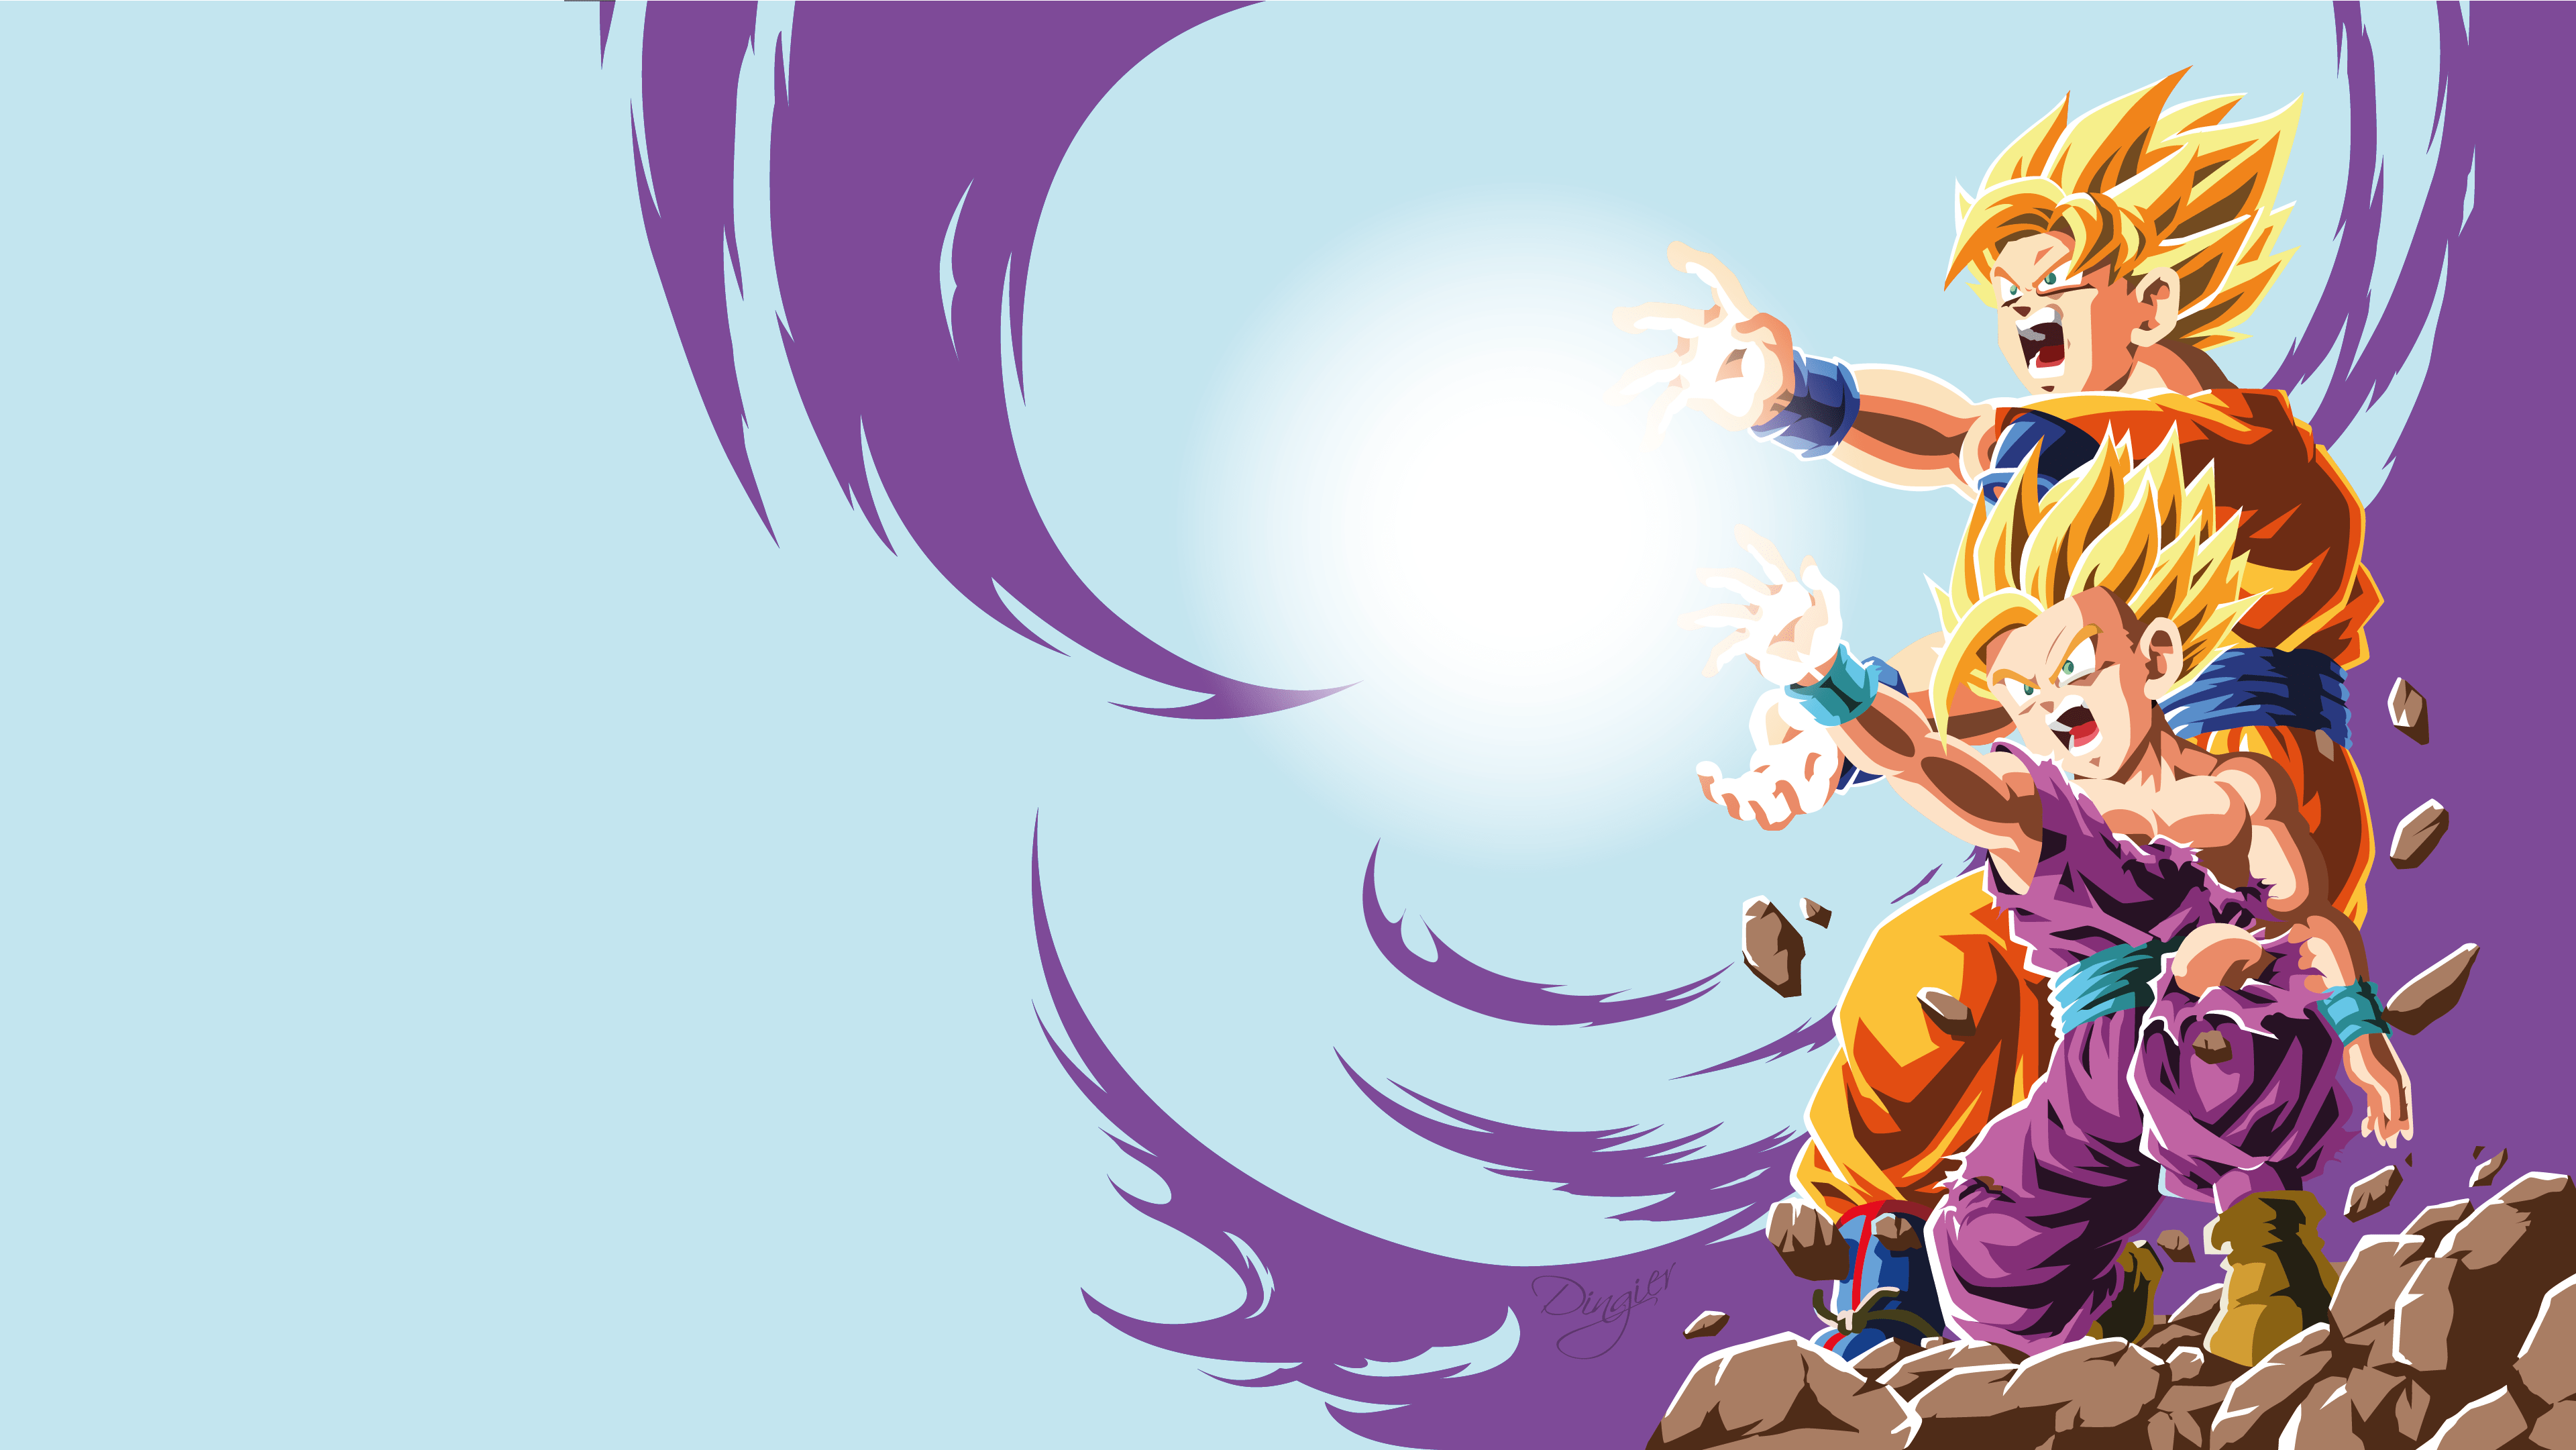 Goku And Gohan Wallpaper Hd Picture Image